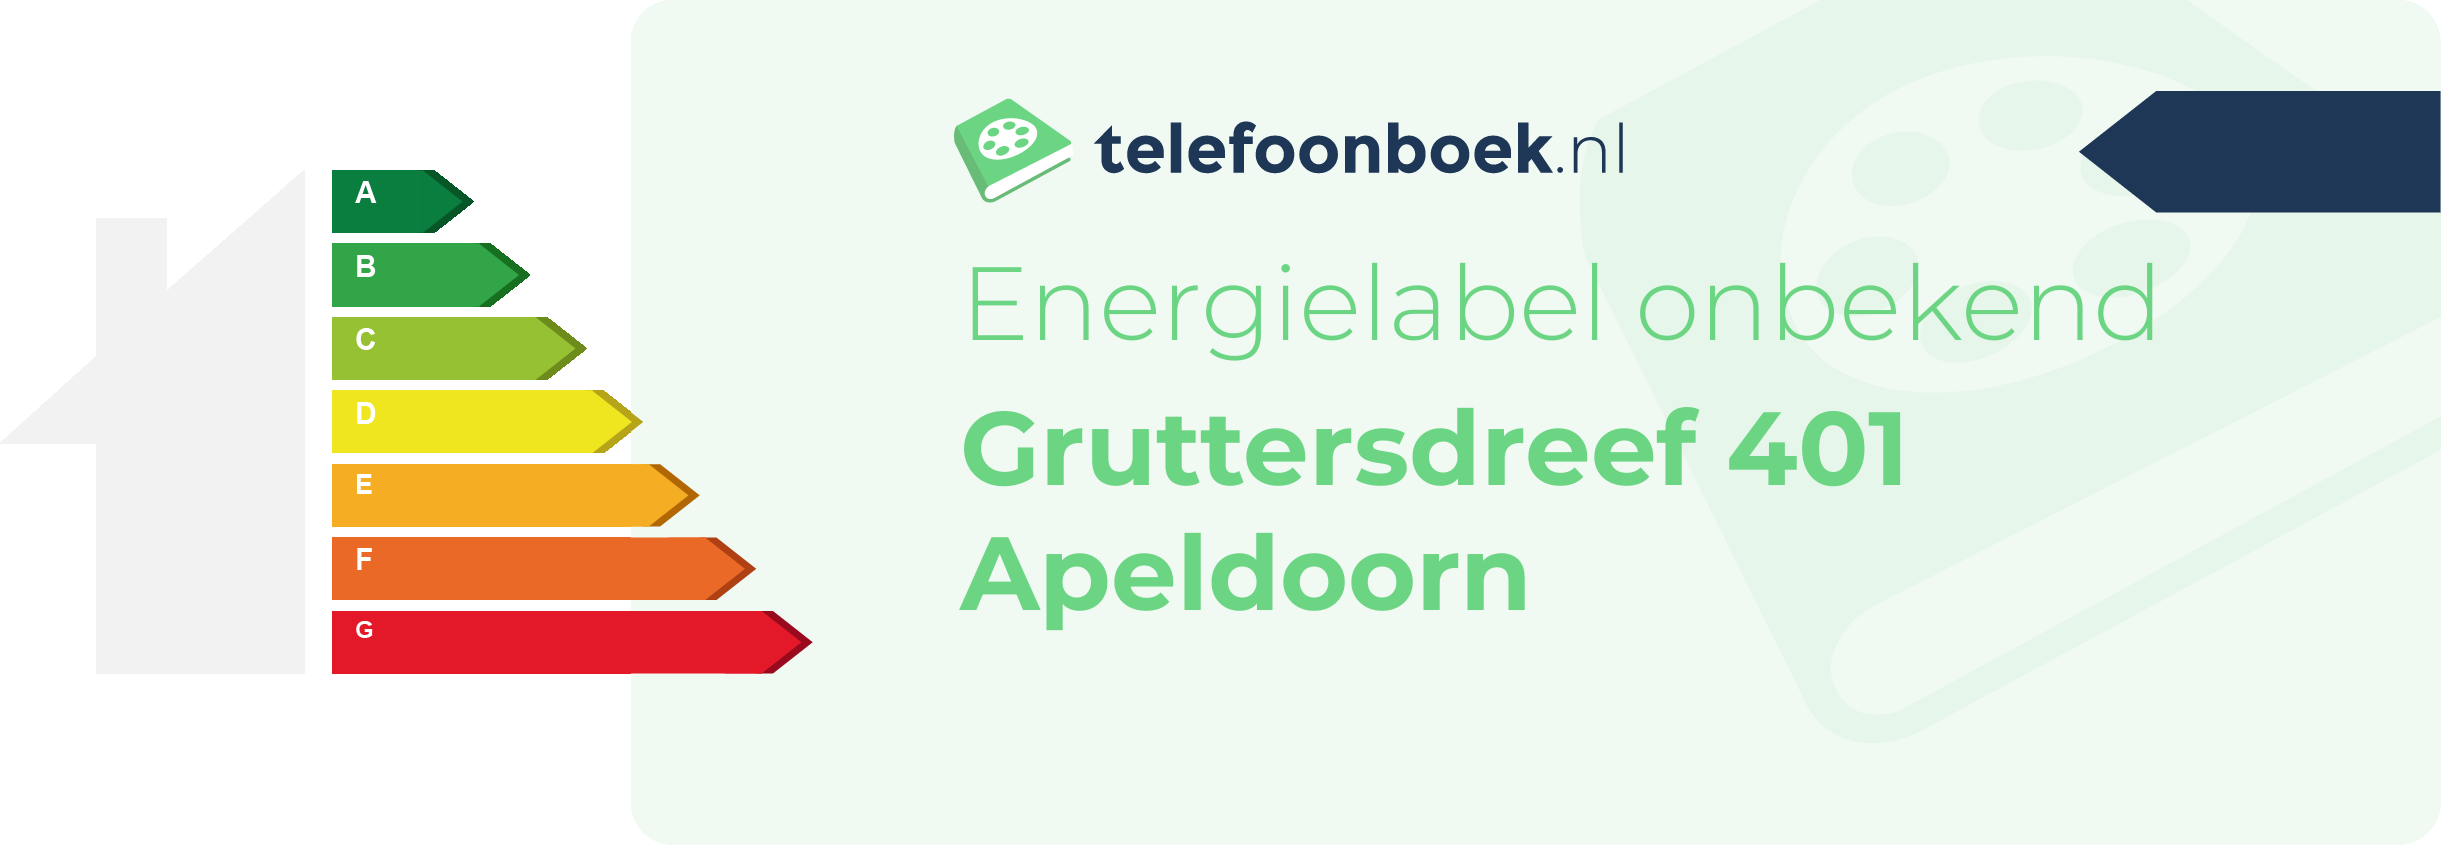 Energielabel Gruttersdreef 401 Apeldoorn